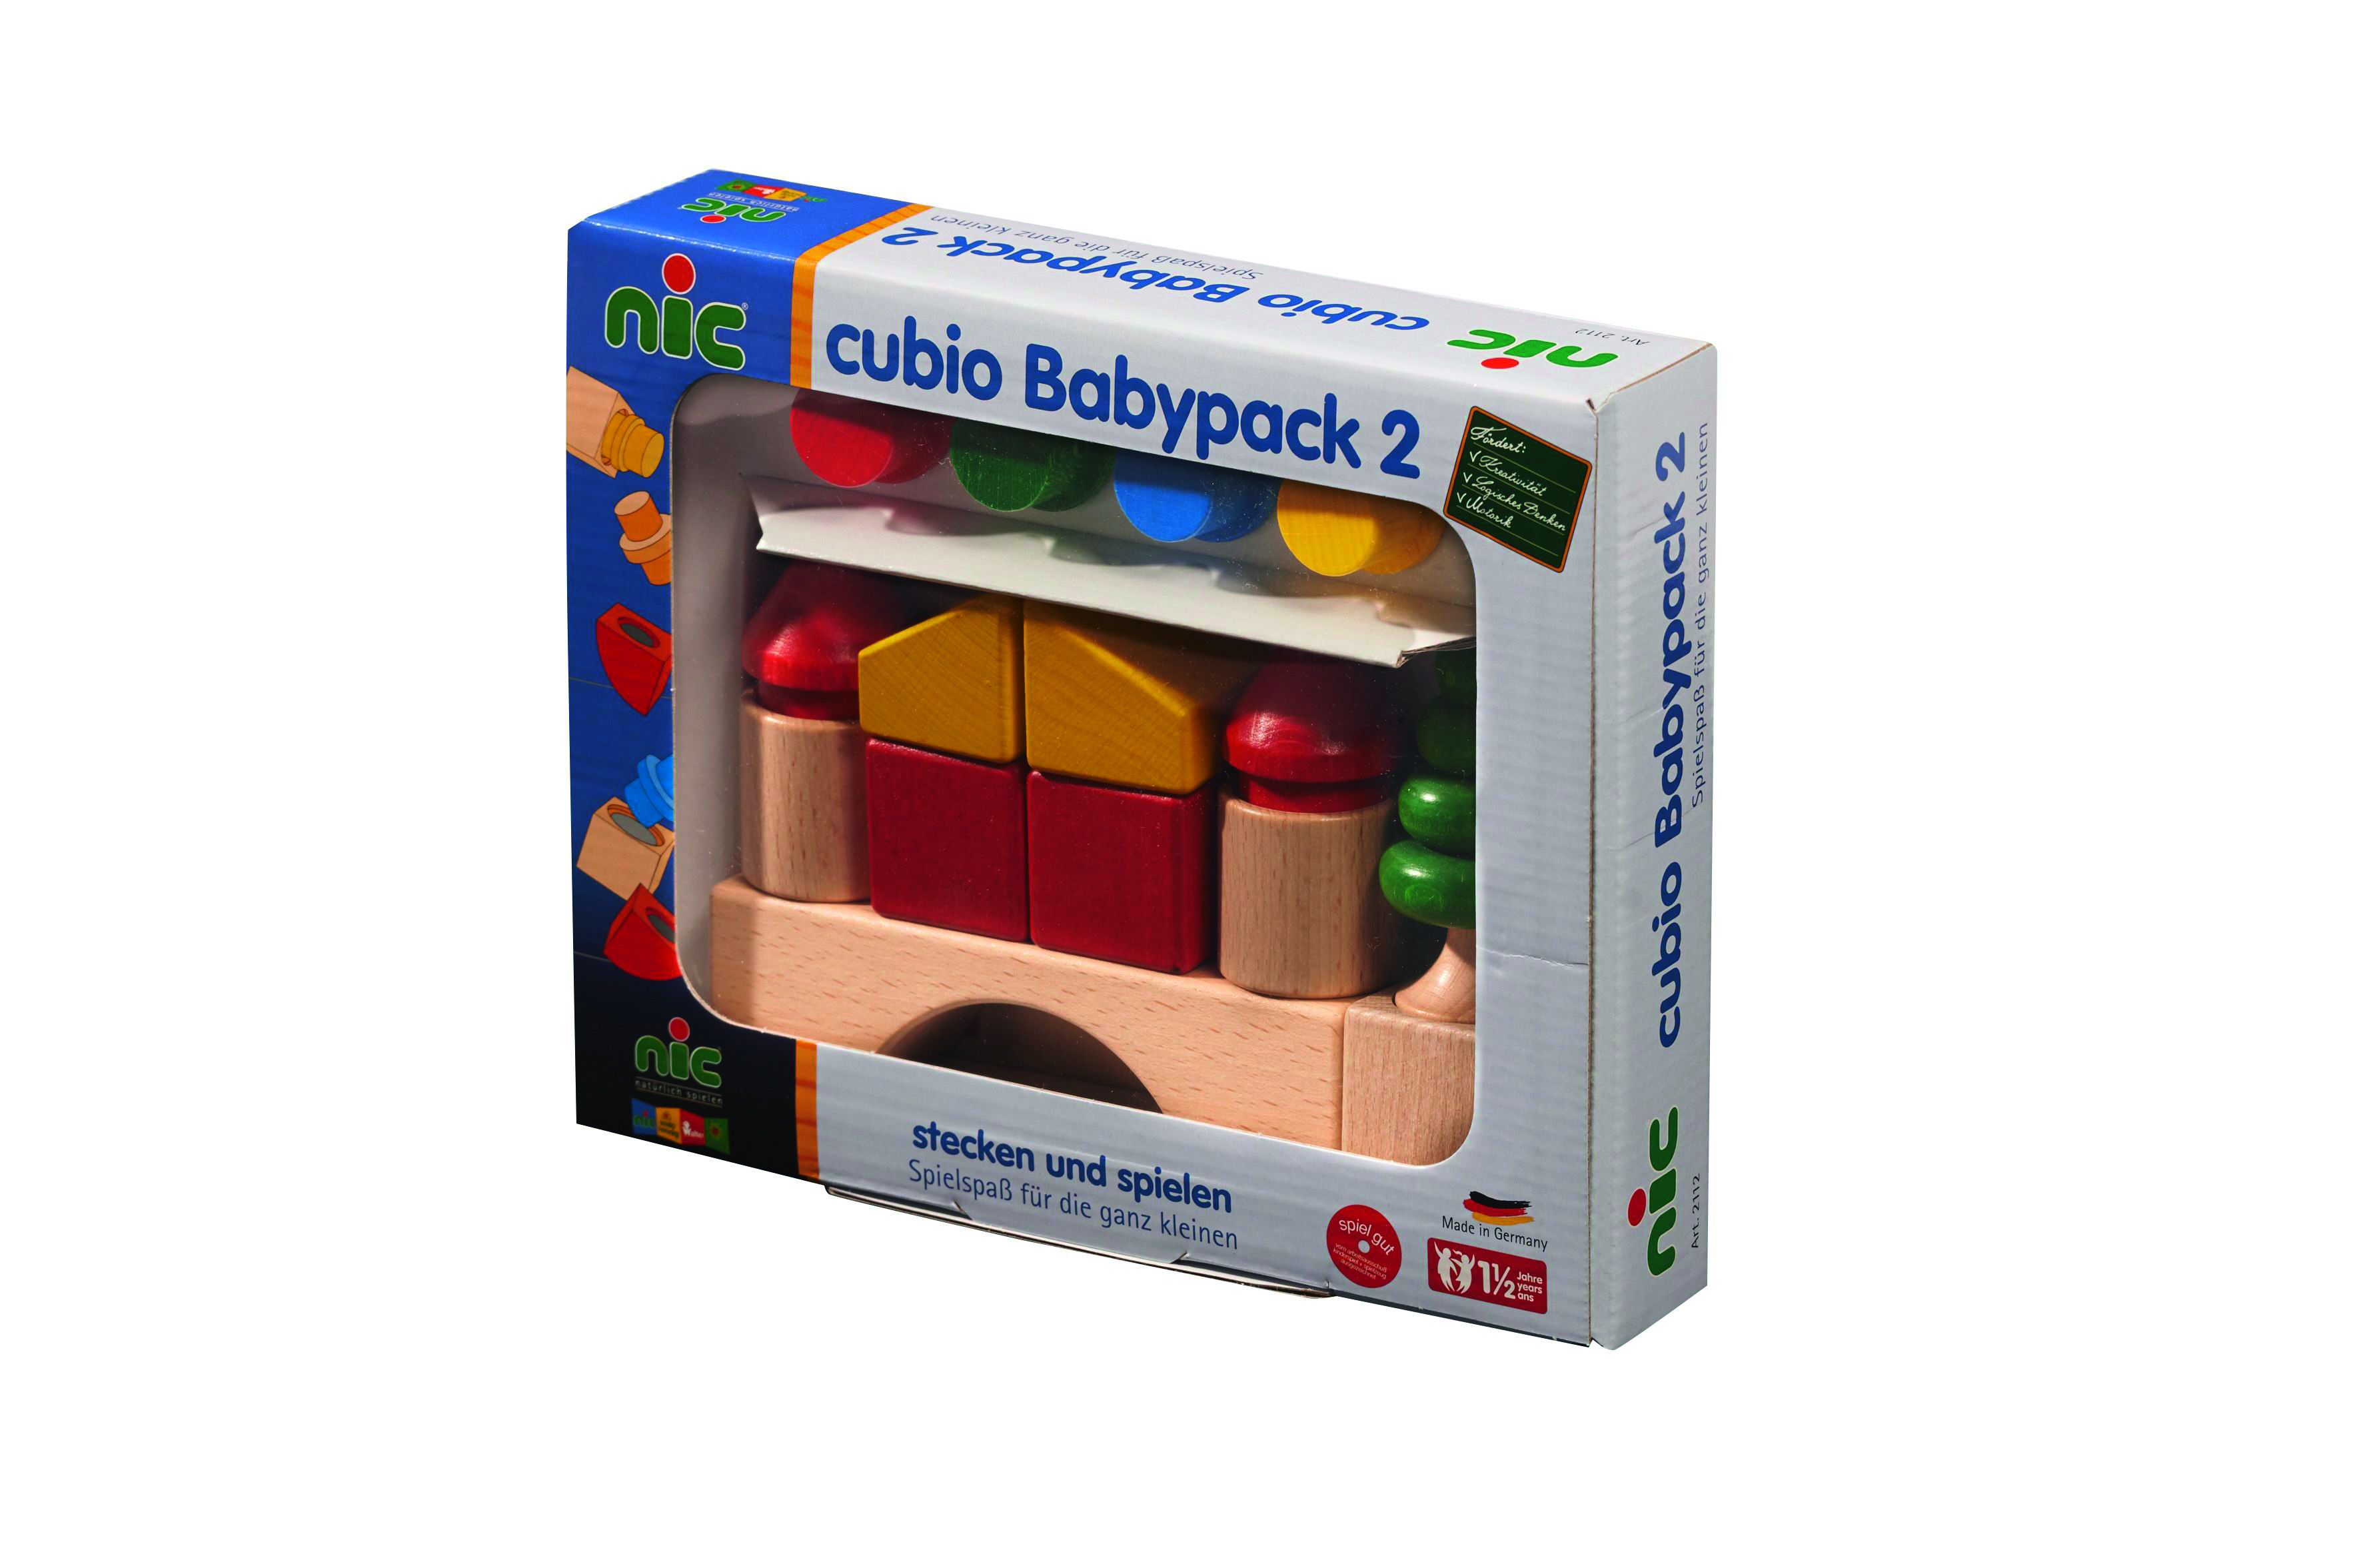 NIC cubio Babypack 2